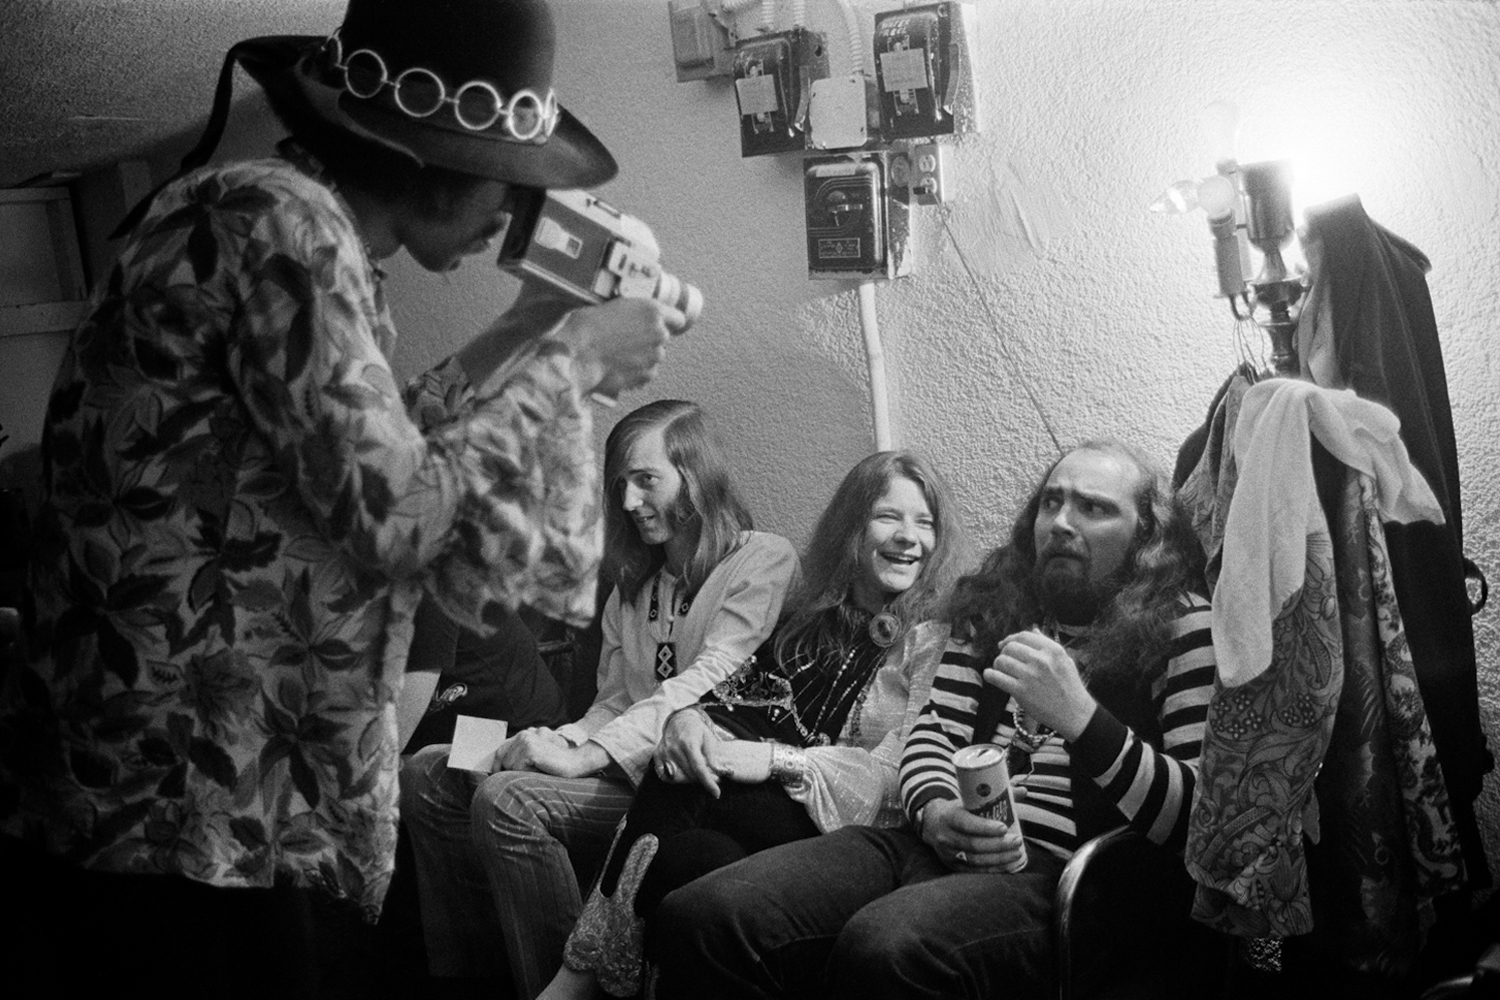 Image: Hendrix films Janis Joplin and Sam Andrew, Joplin's guitar player in Big Brother. Winterland, 1968.